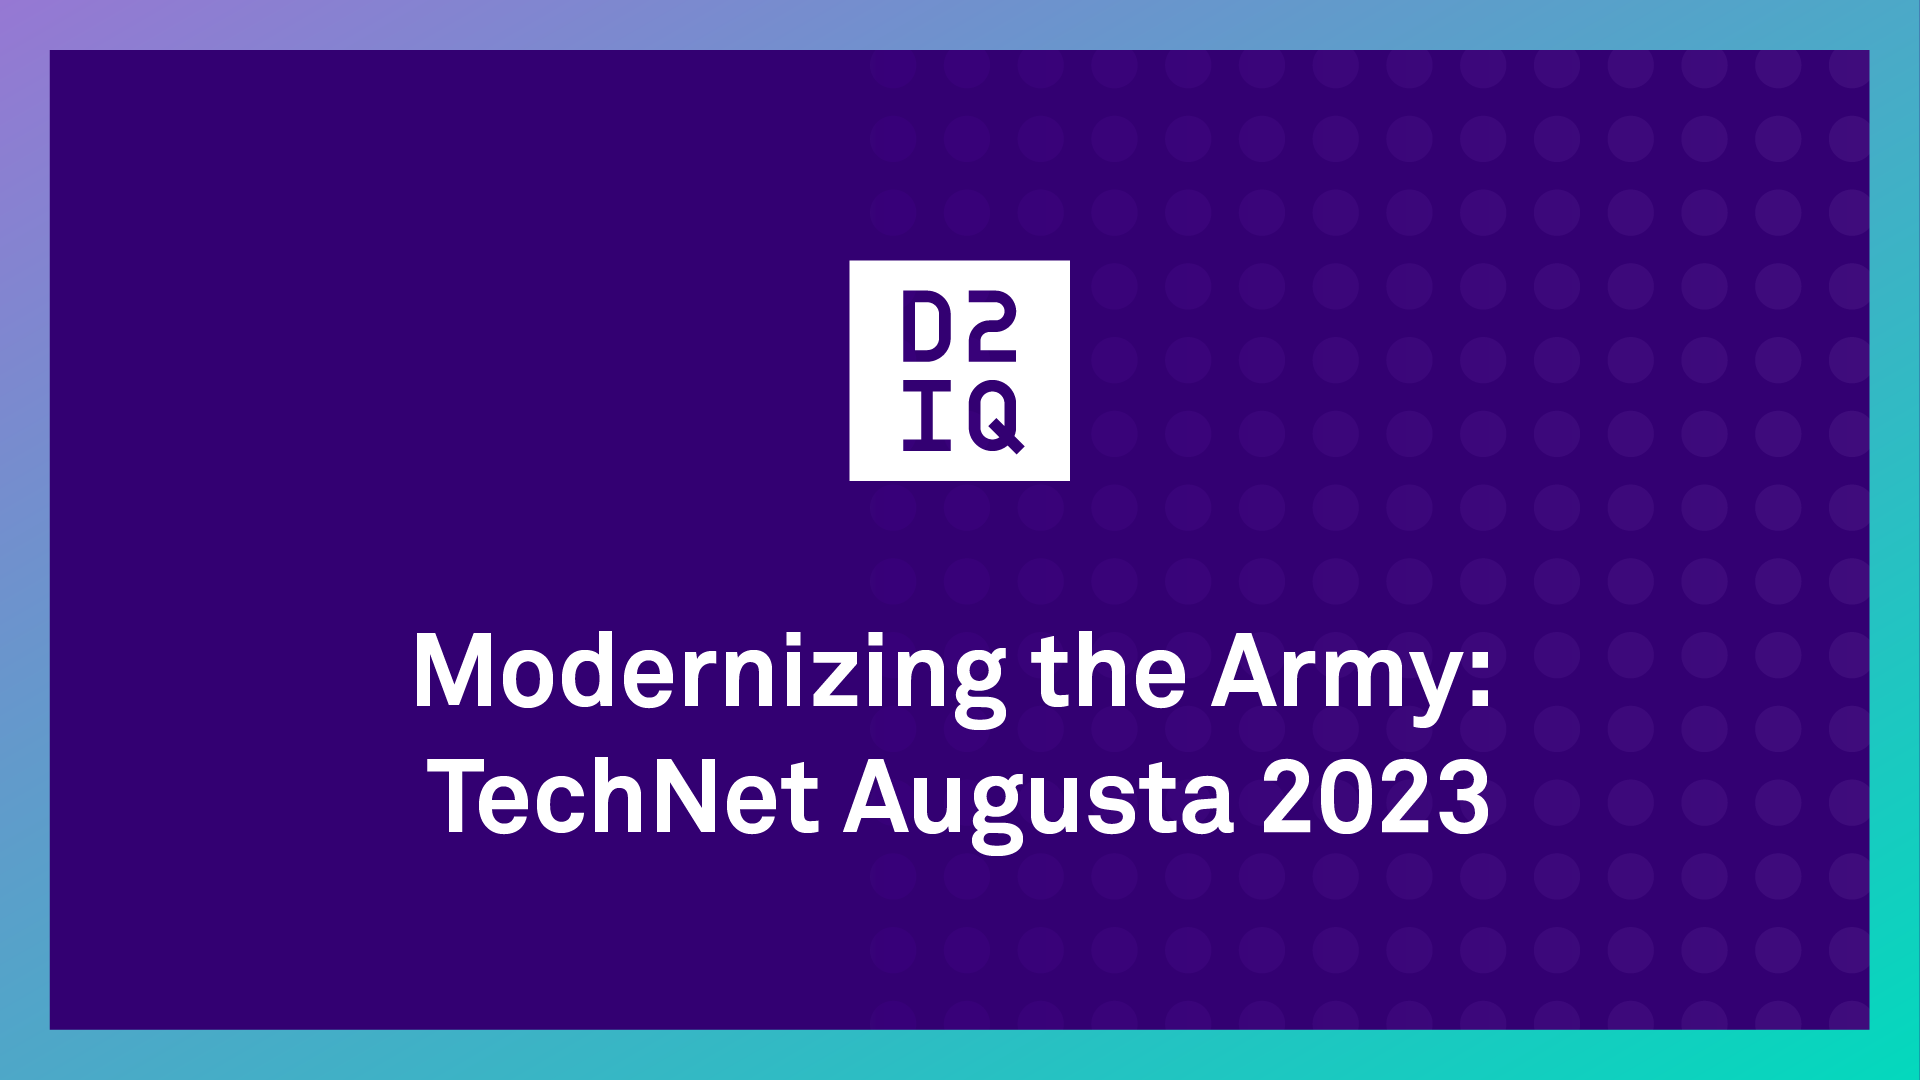 TechNet Augusta: Modernizing the Army